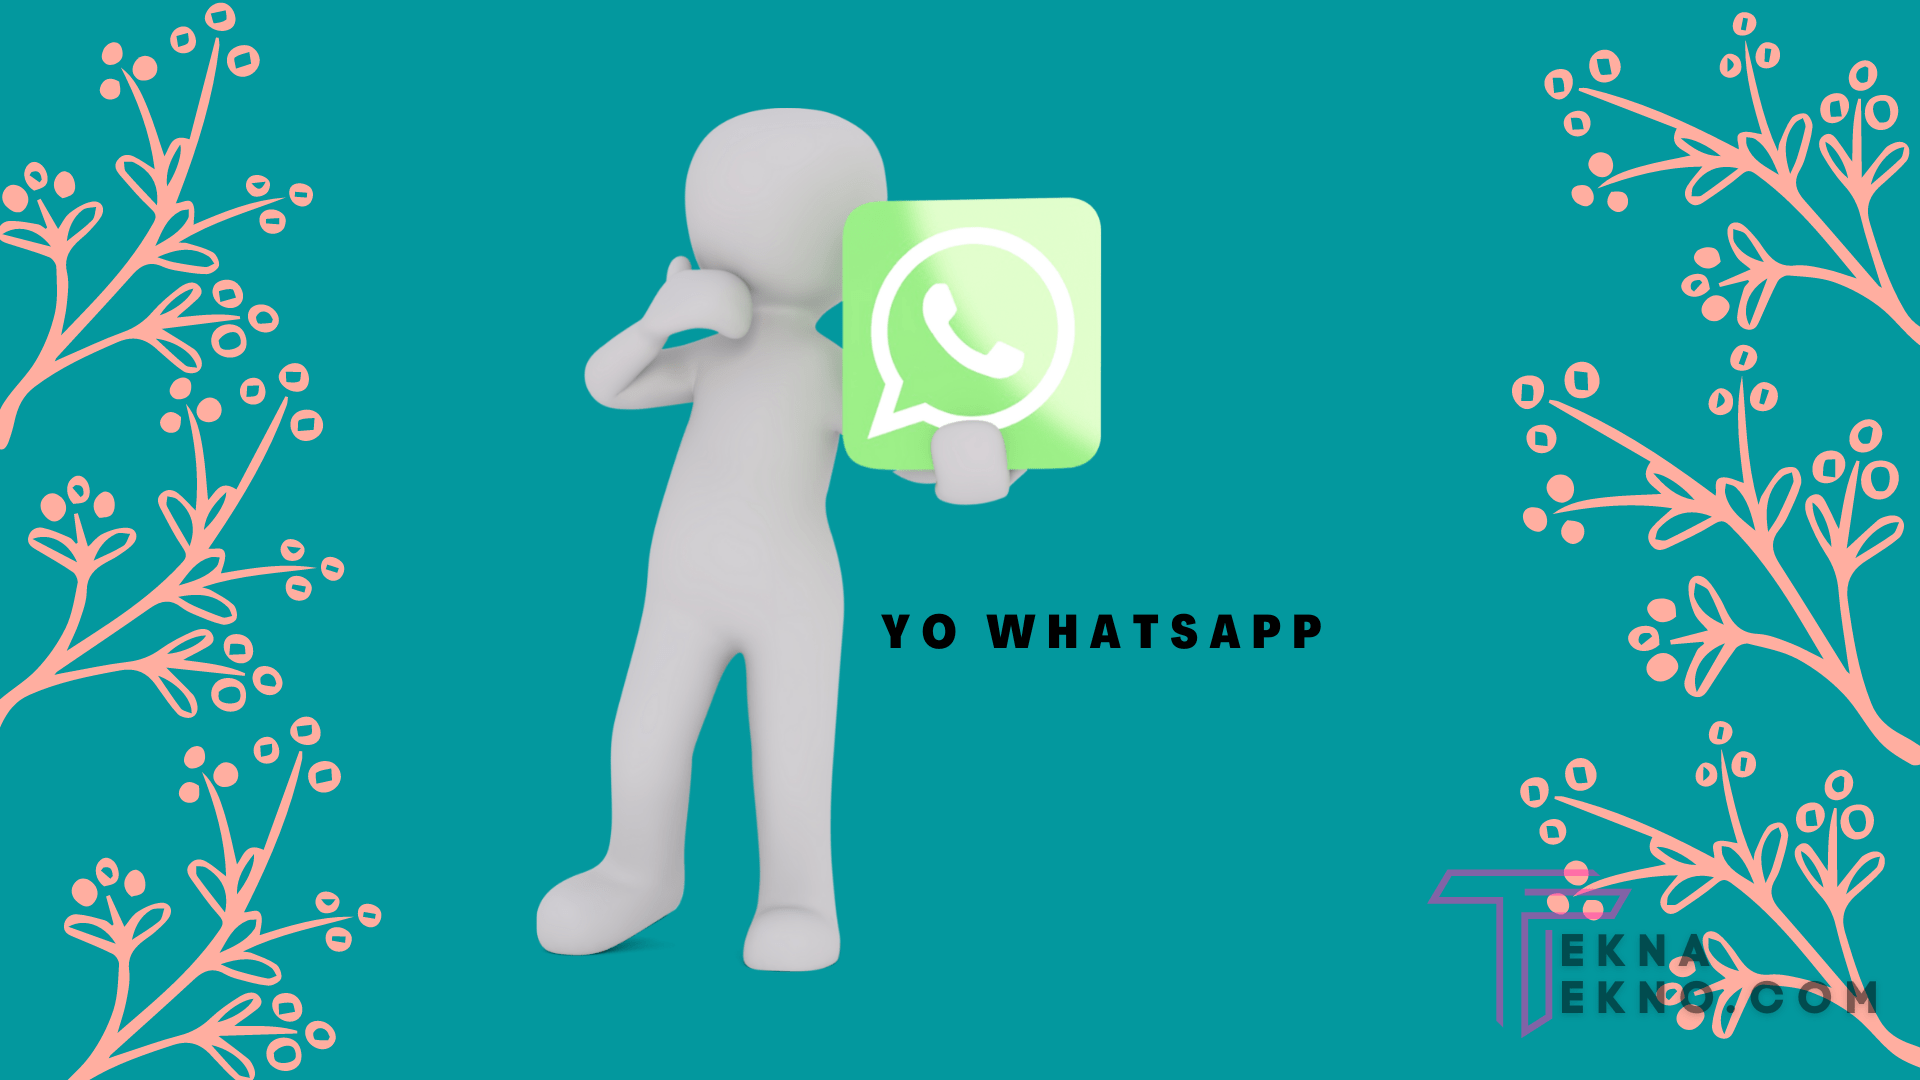 Cara Download Yo WhatsApp Terbaru